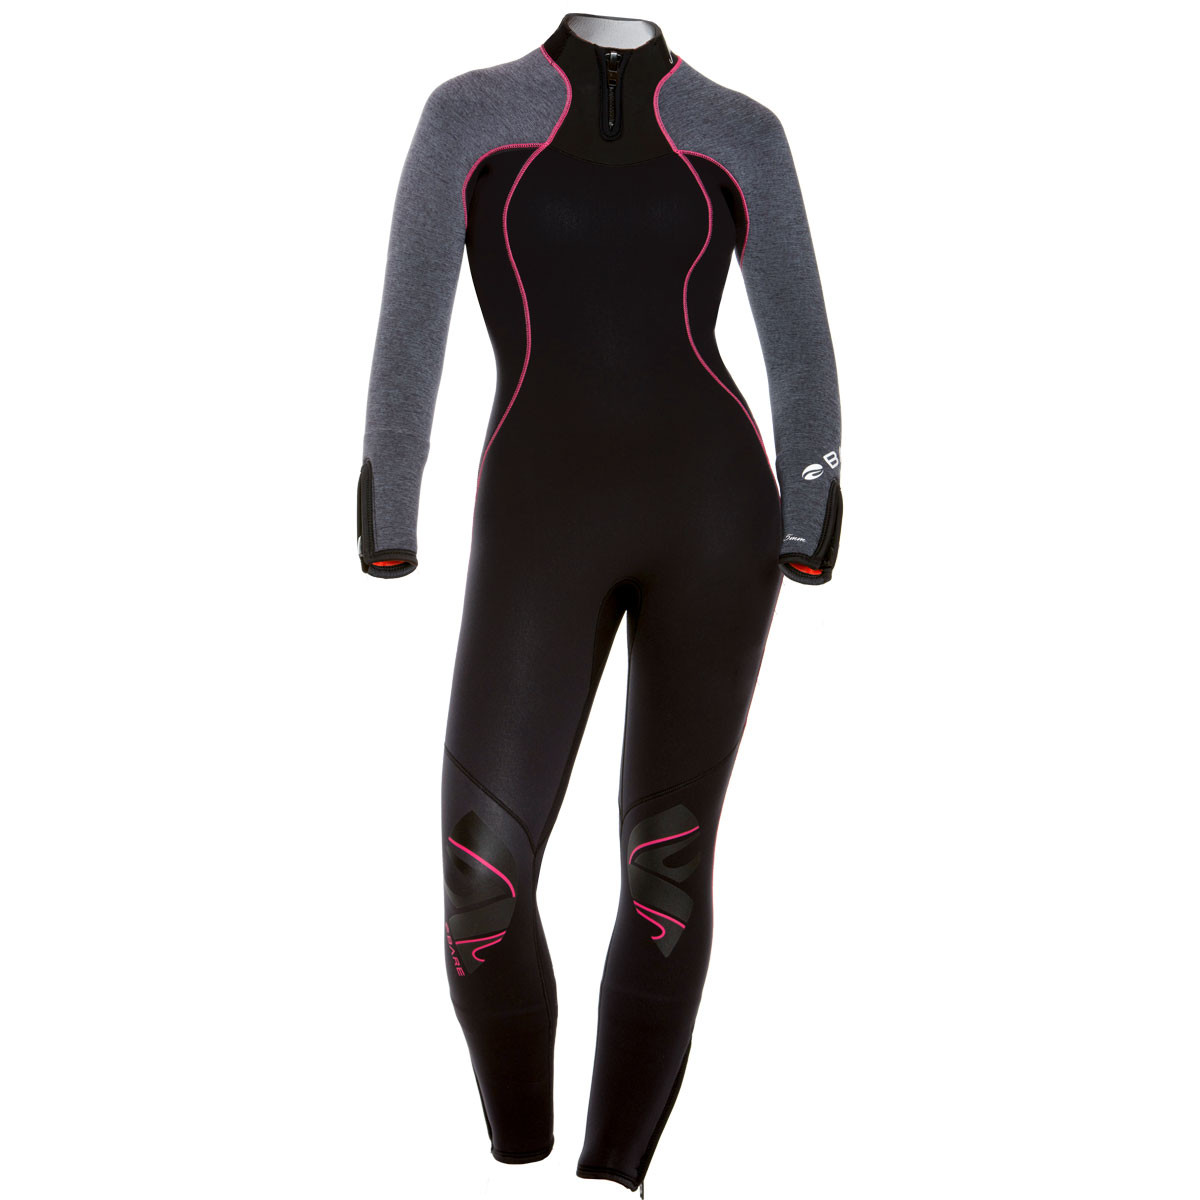 BARE Evoke 3mm Wetsuit 2021 For Sale Online in Canada - Dan's Dive